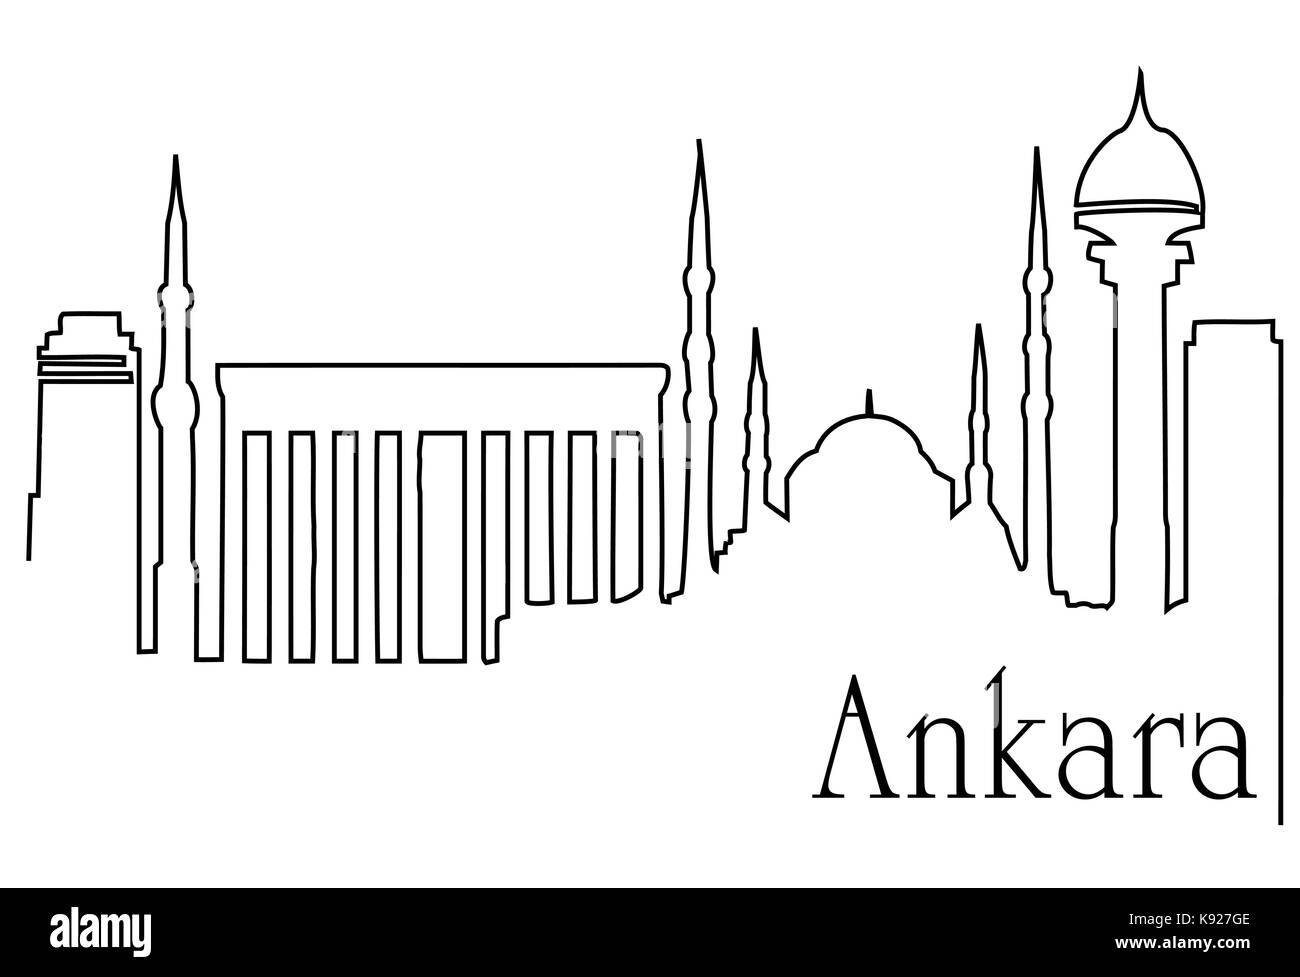 Ankara city one line drawing Stock Vector